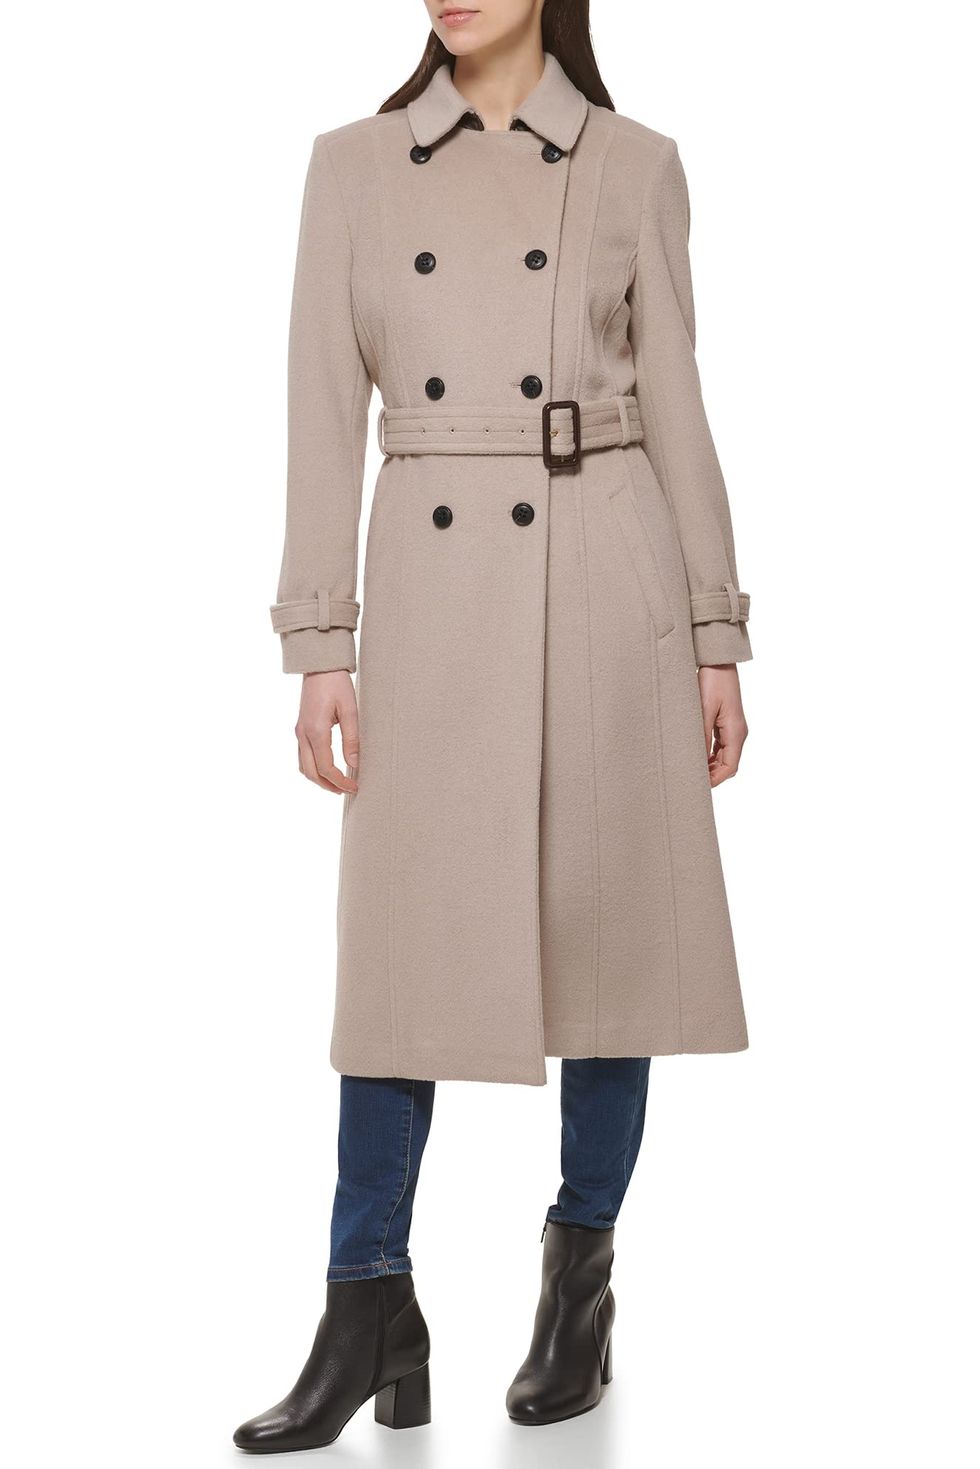 Women Winter Warm Wool Blend Mid-Long Coat Lapel Single Breasted Jacket  Outwear Pea Coat for Cold Weather 